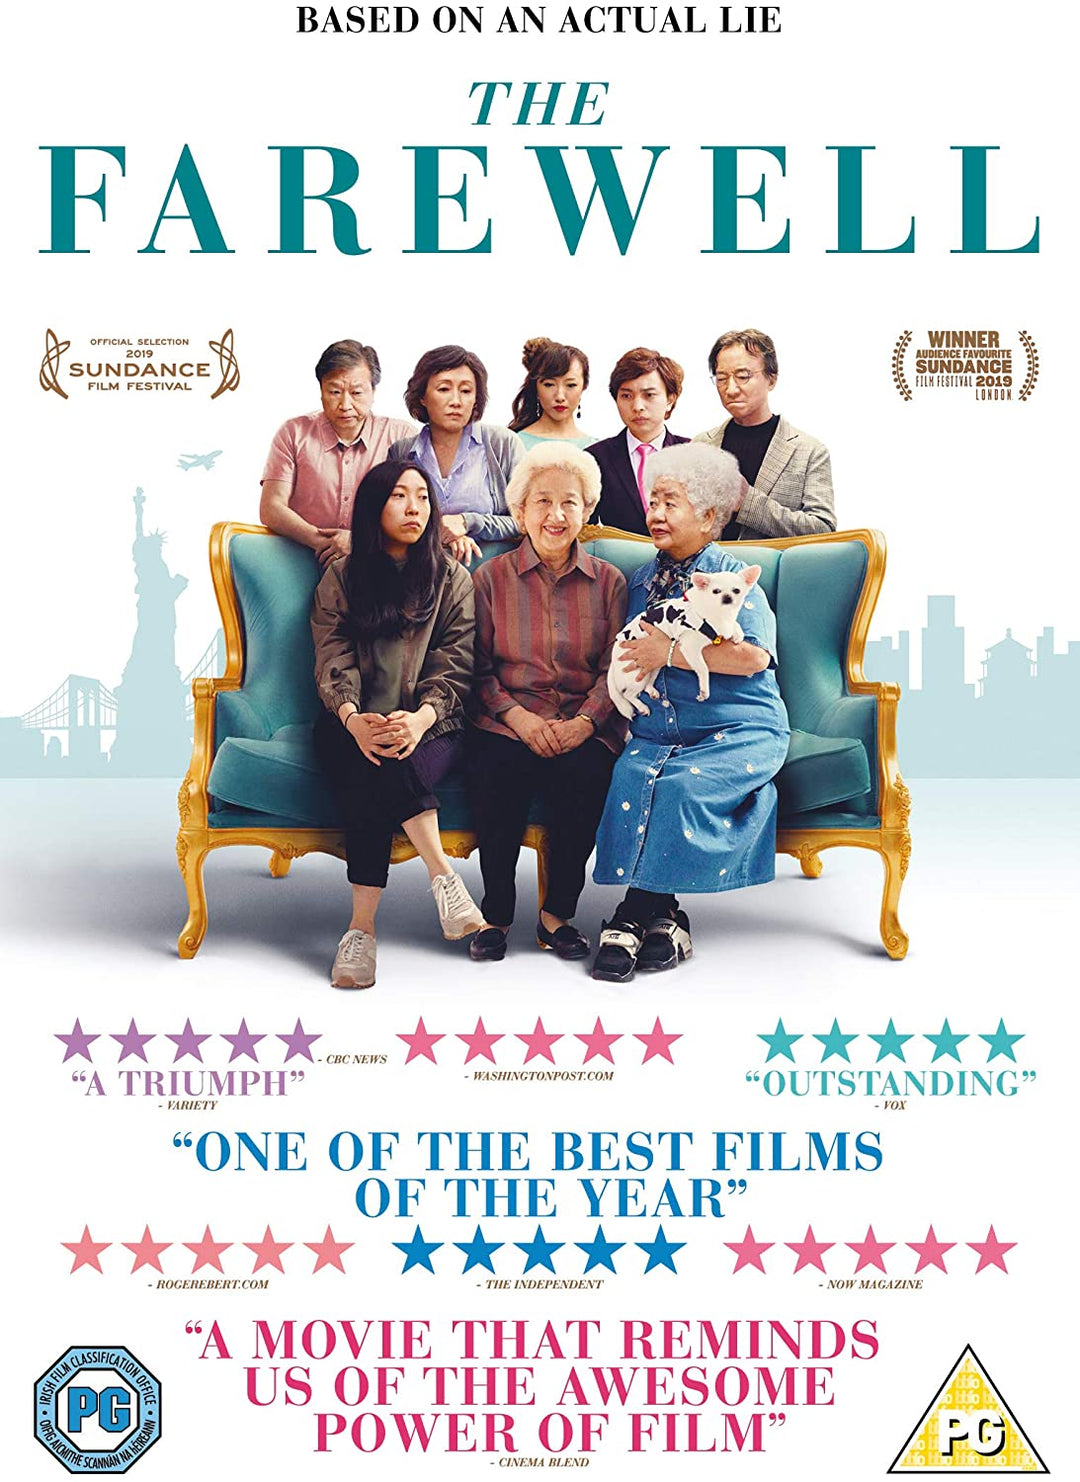 The Farewell - Comedy/Drama [DVD]